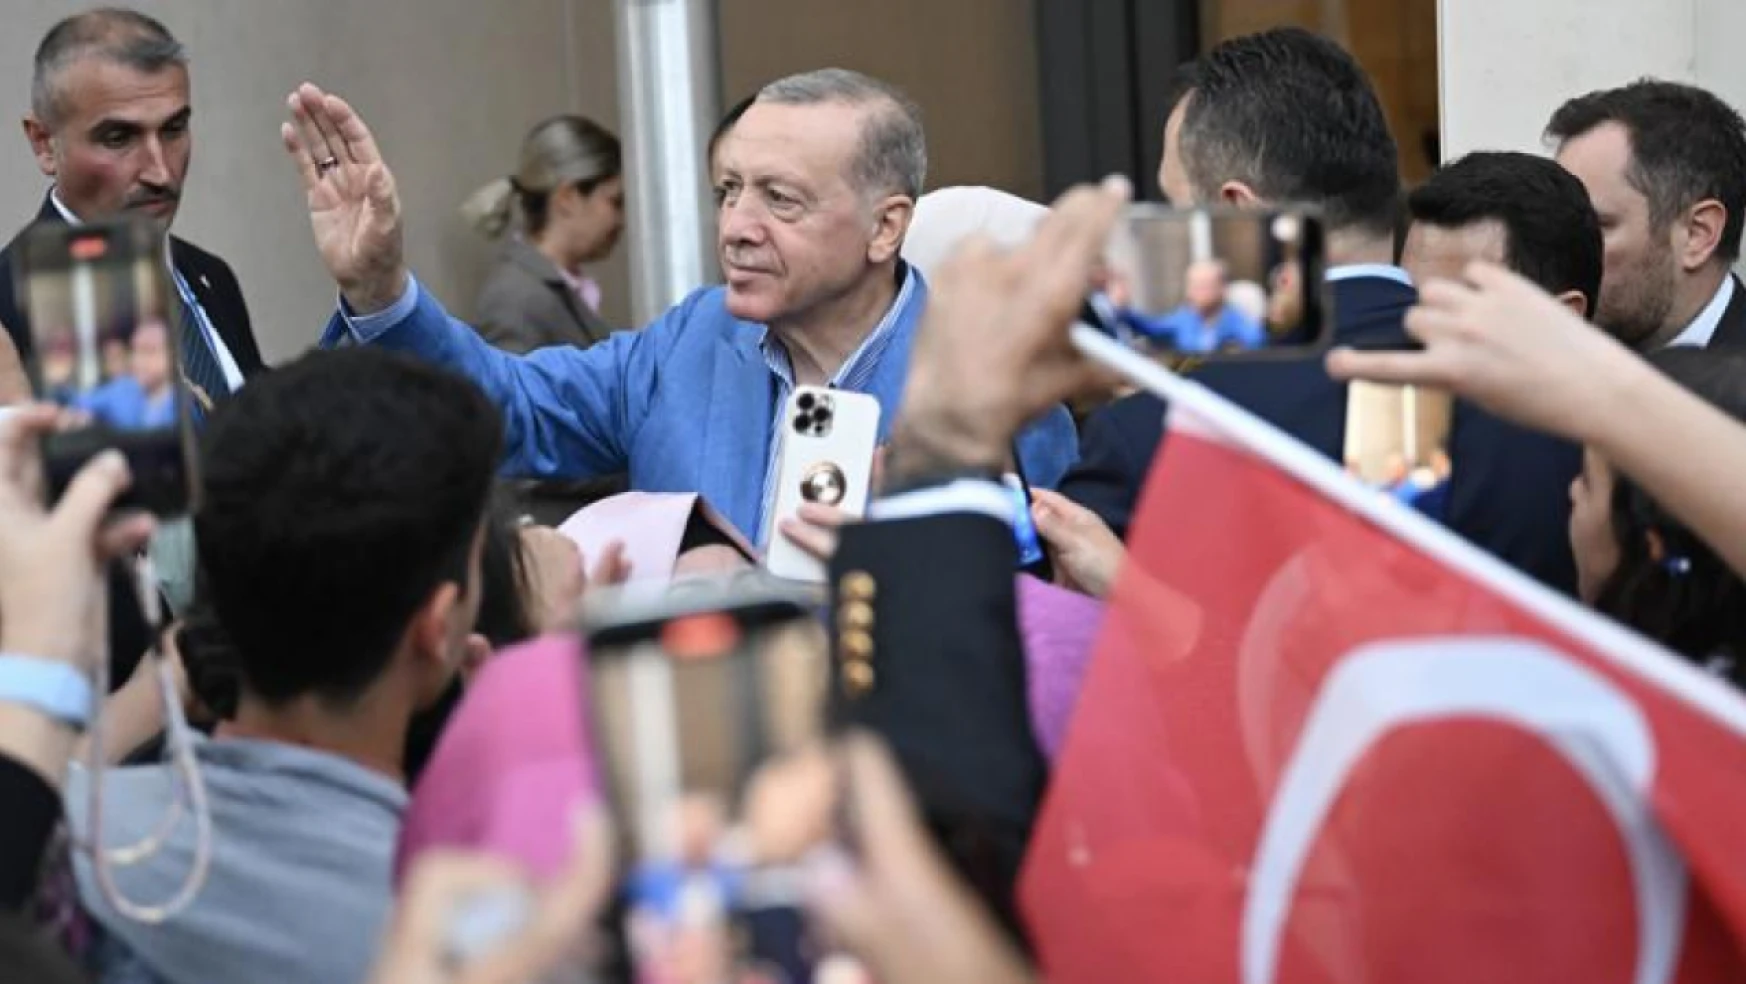 Cumhurbaşkanı Erdoğan New York'ta